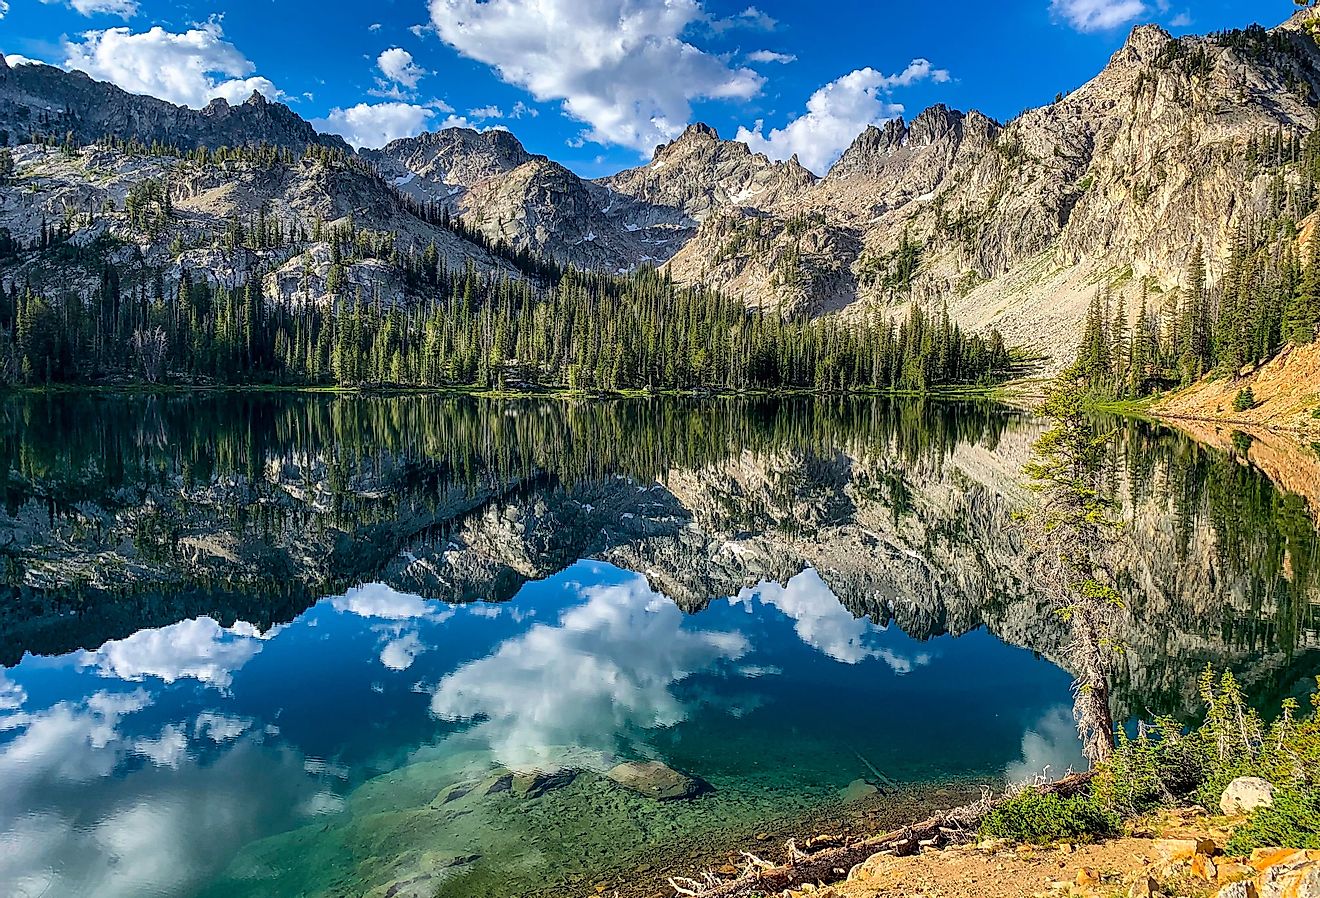 Sawtooth Mountains near Sun Valley, Idaho. Image credit CSNafzger via Shutterstock. 